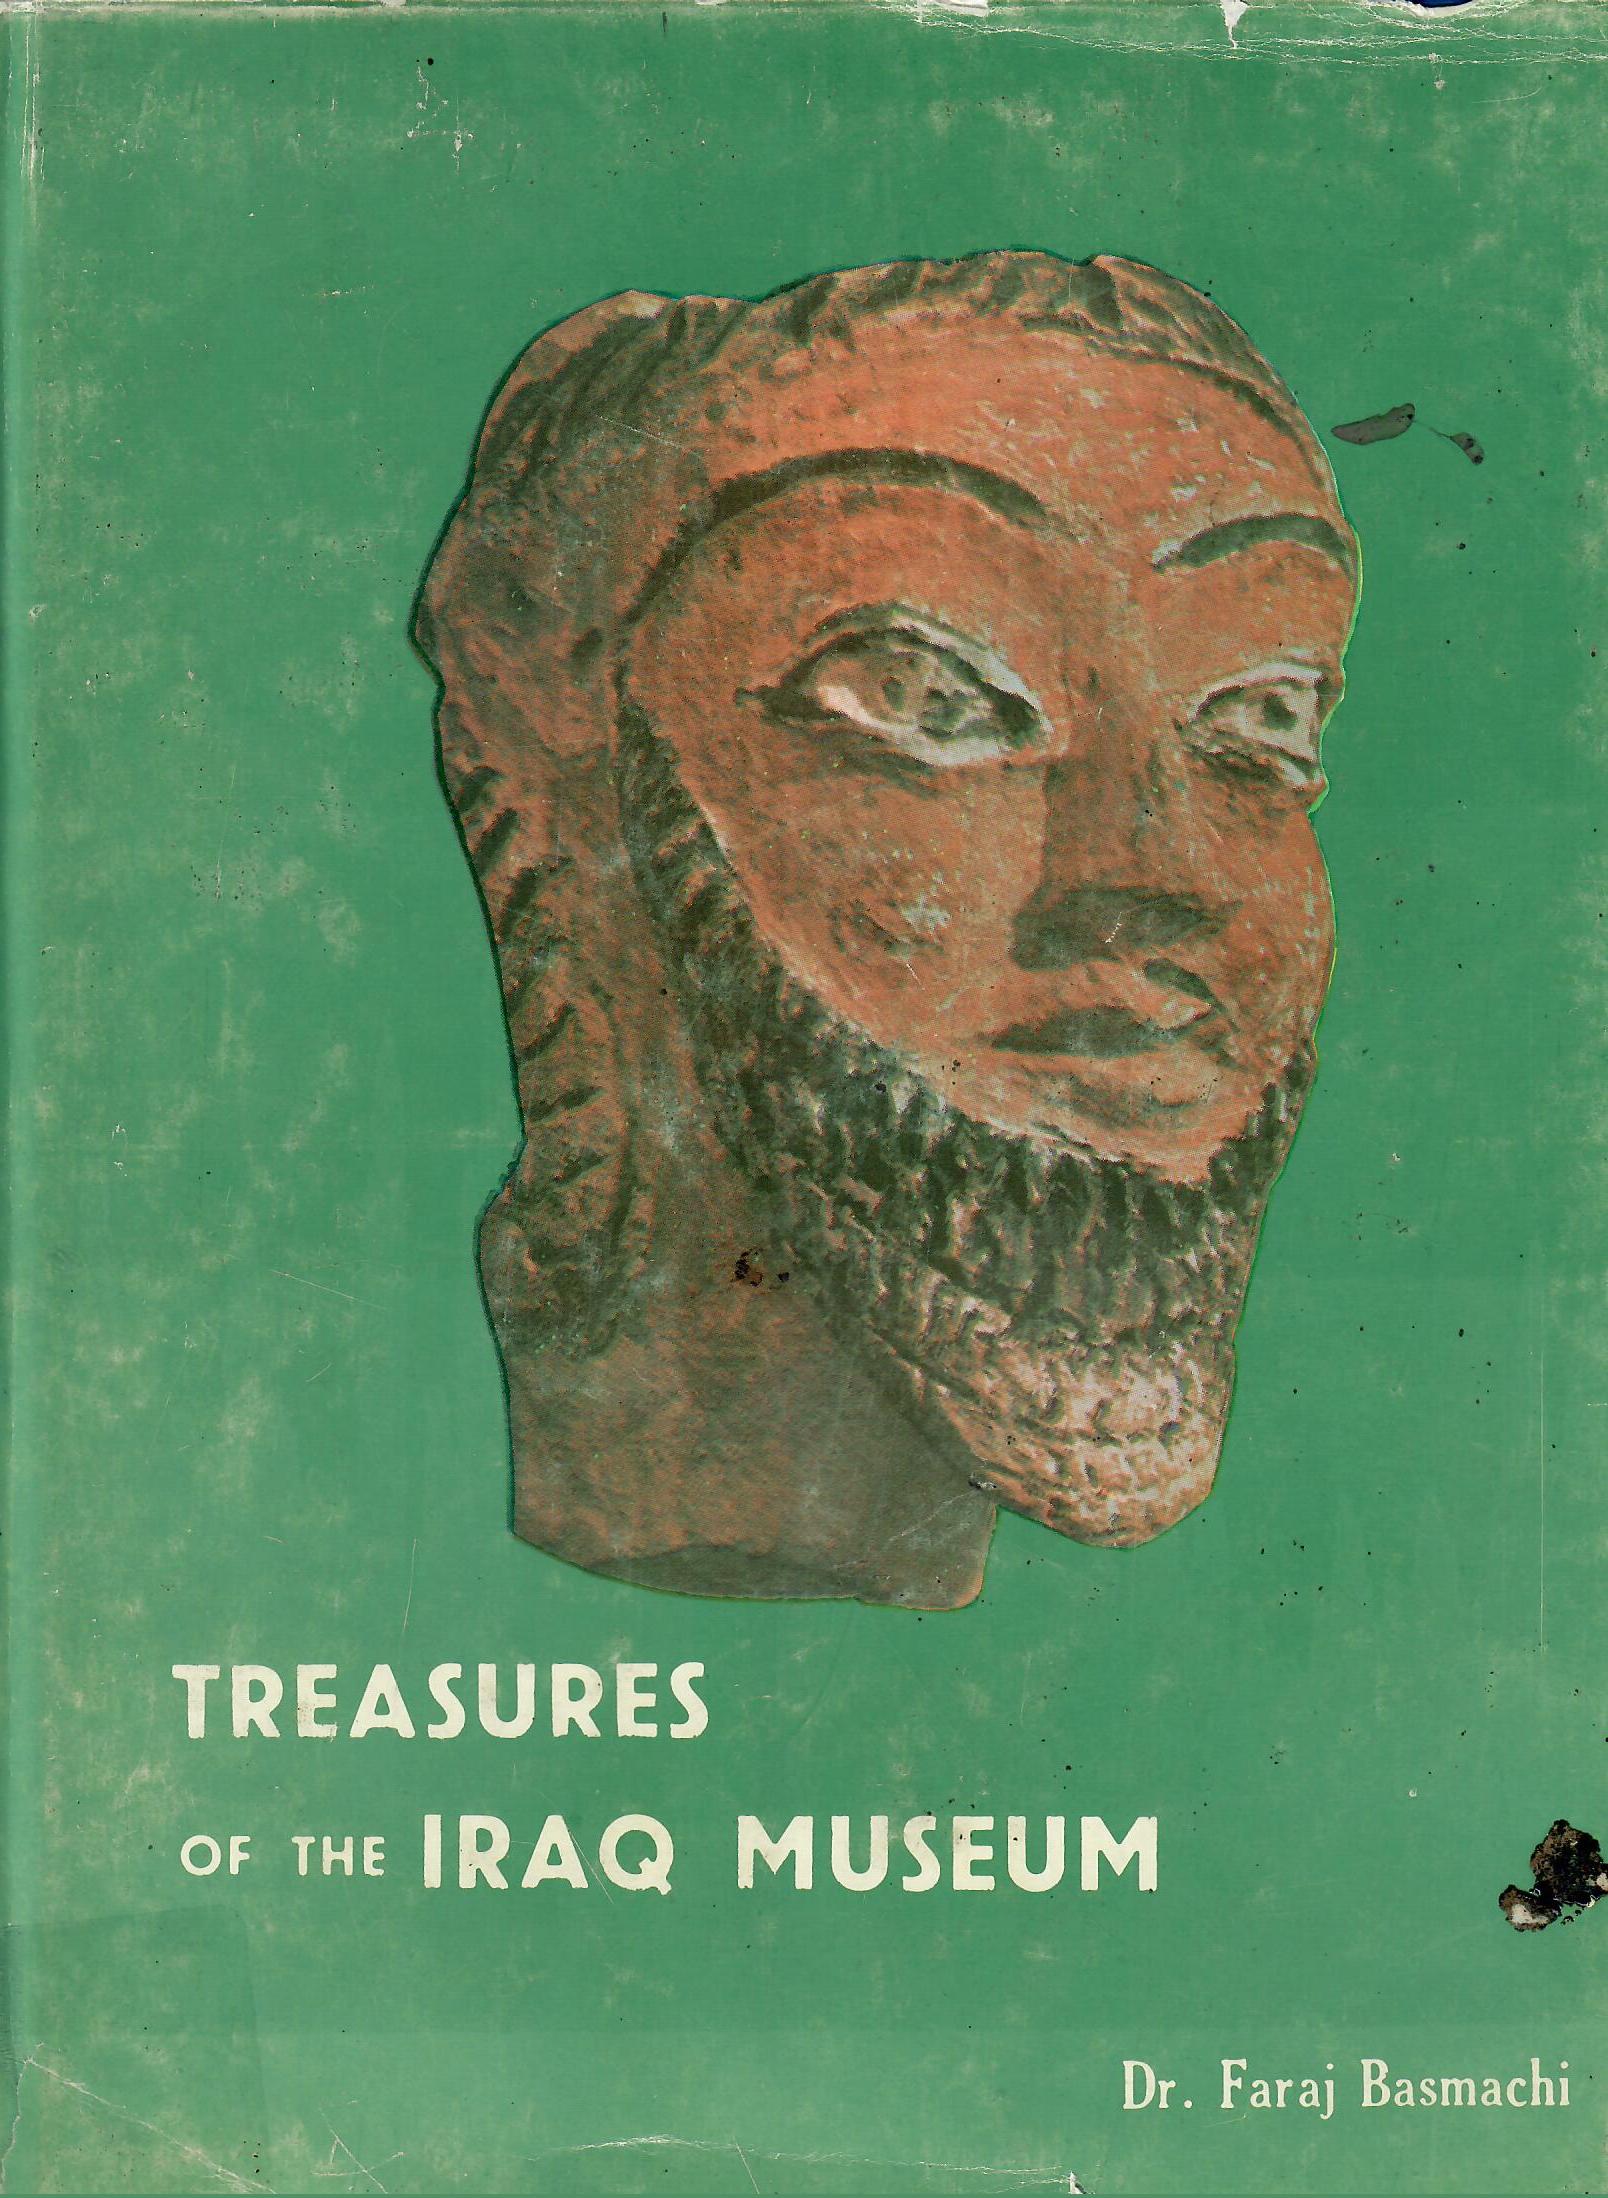 TREASURES OF THE IRAQ MUSEUM